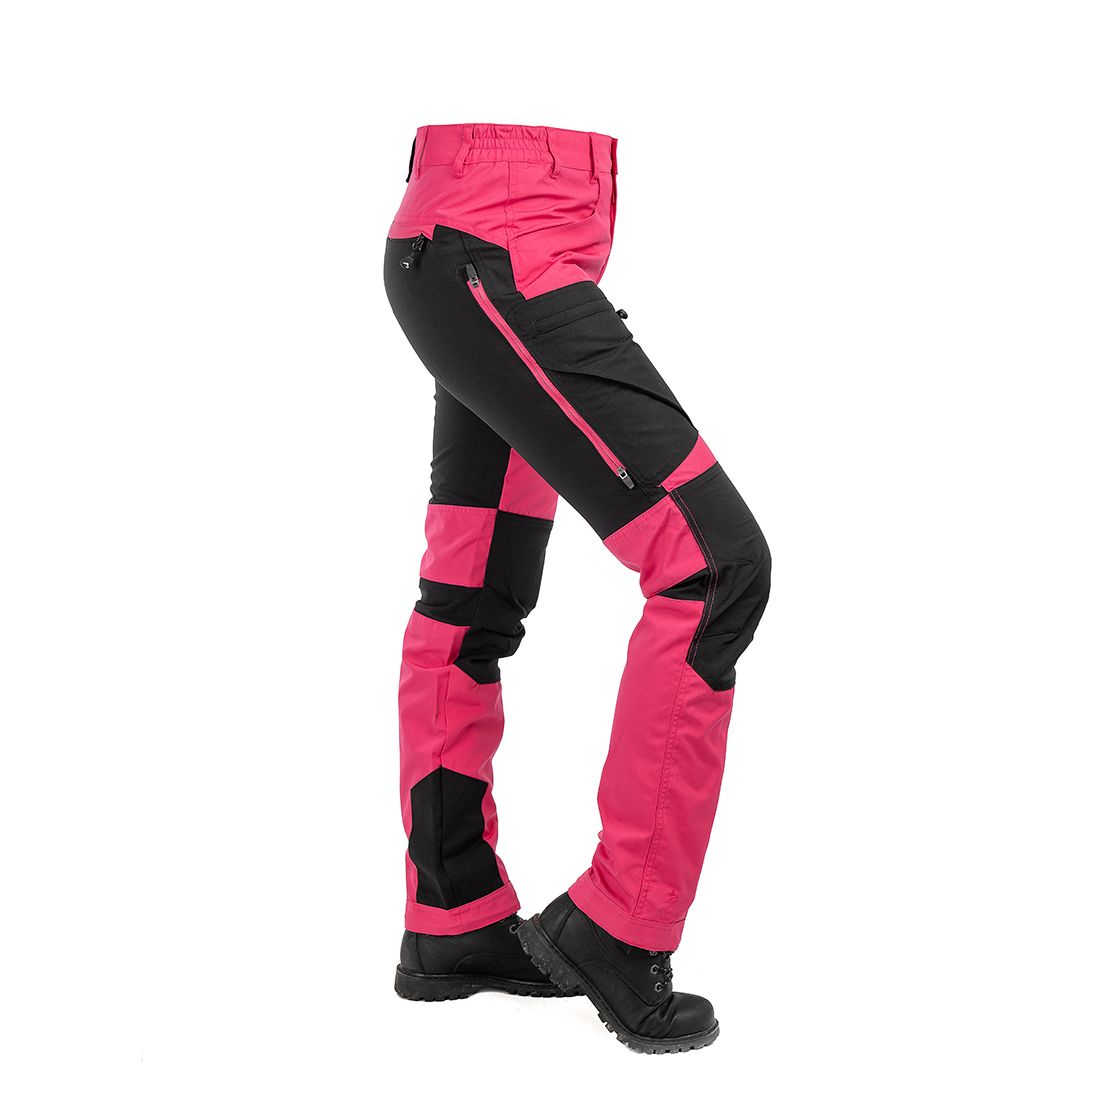 Arrak Active Stretch pants - pink